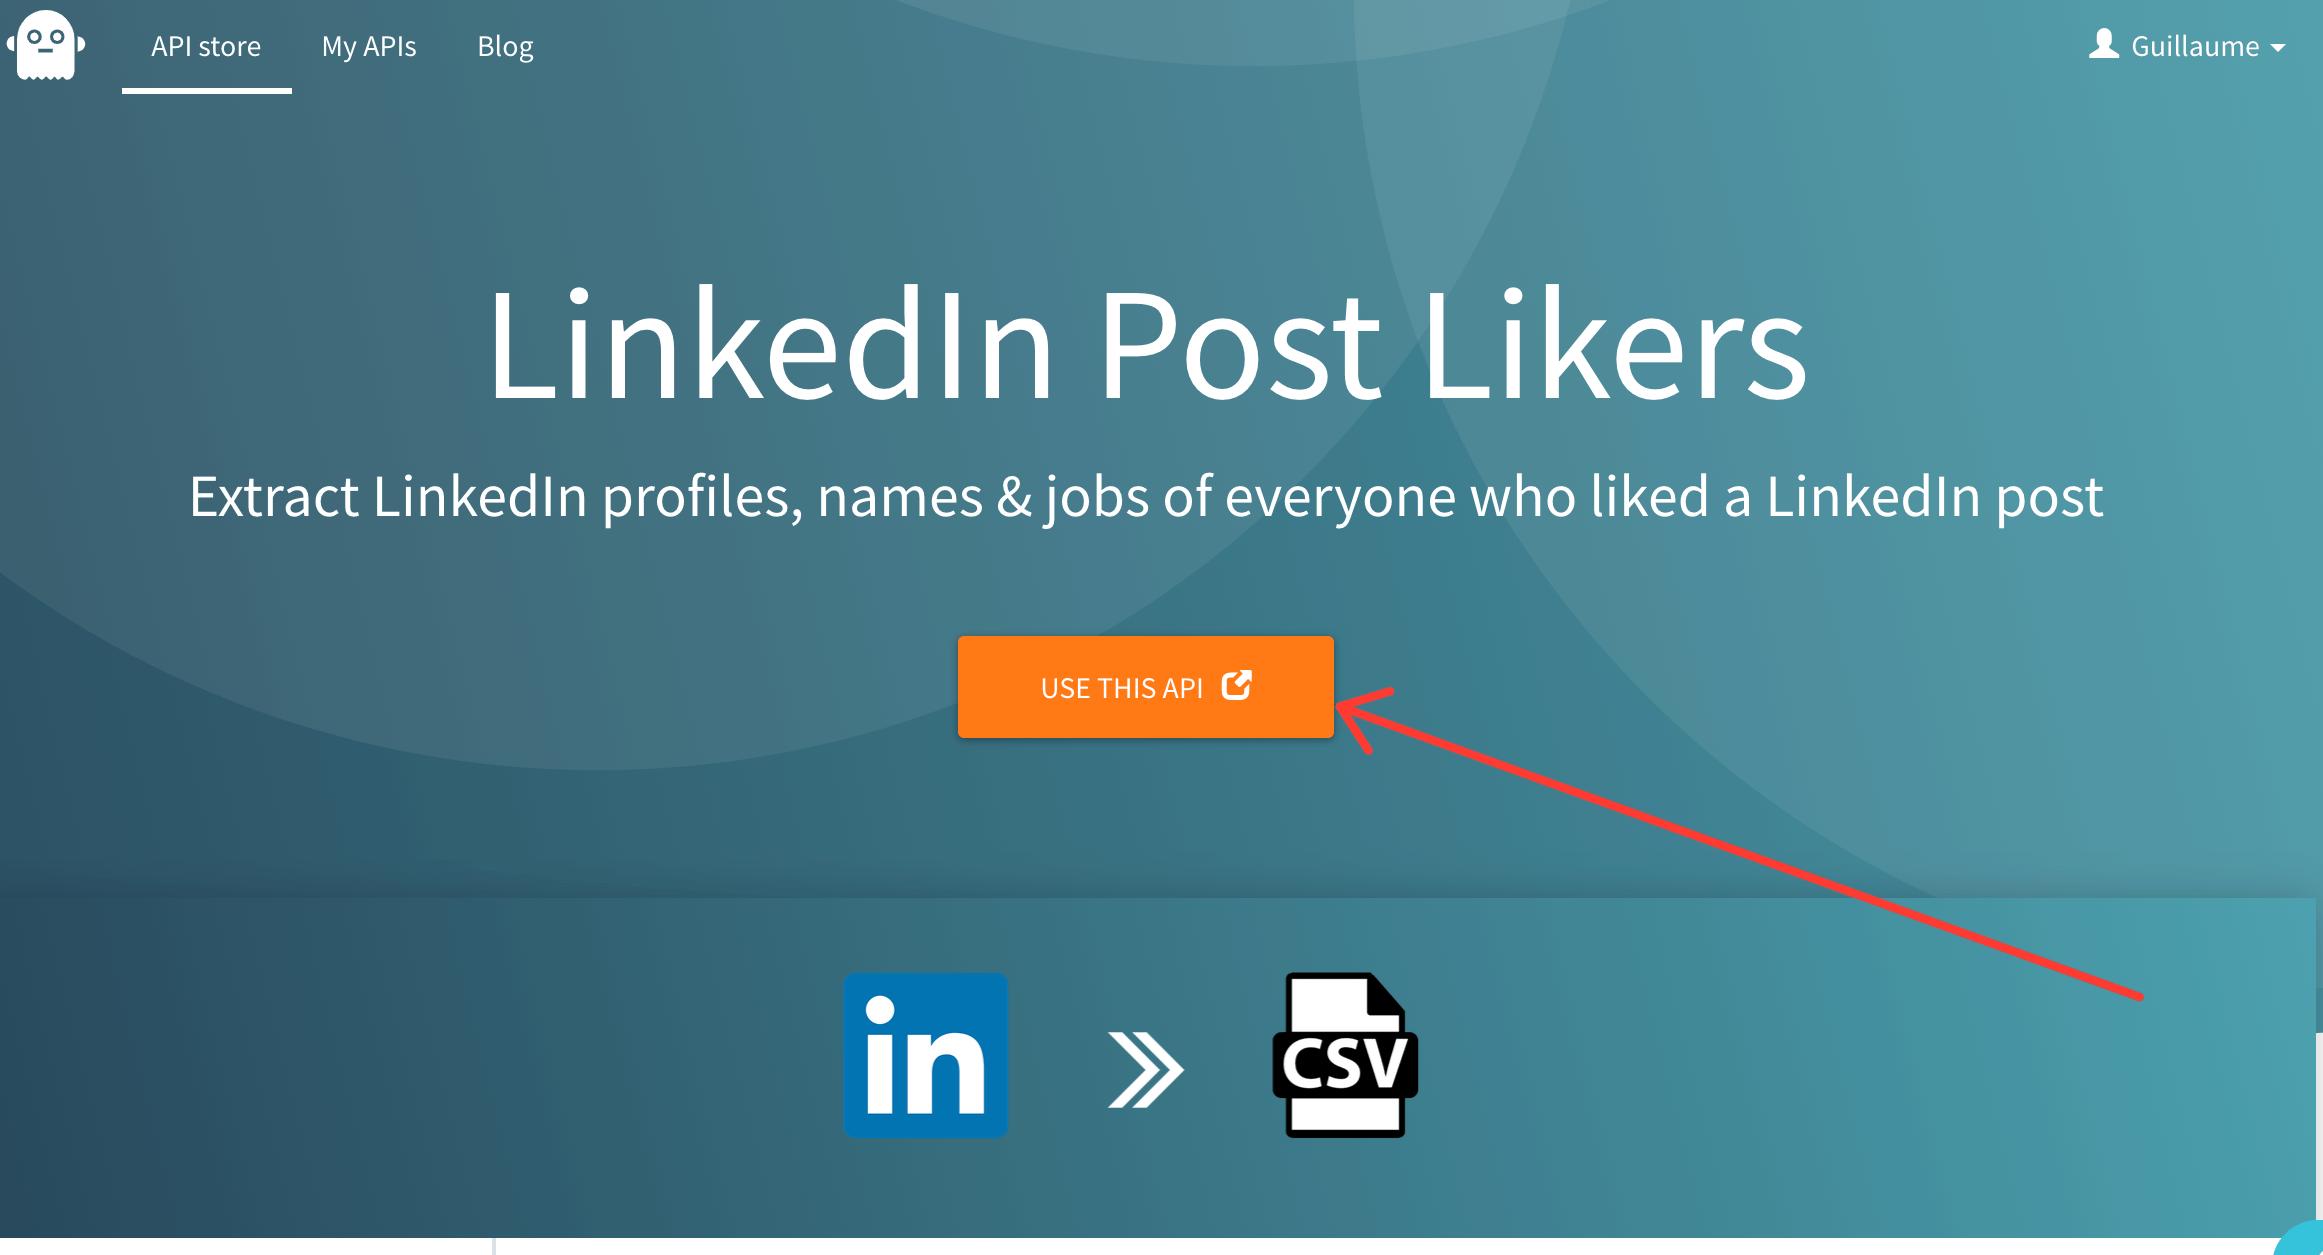 LinkedIn Marketing Tools - Phantombuster for LinkedIn post likers